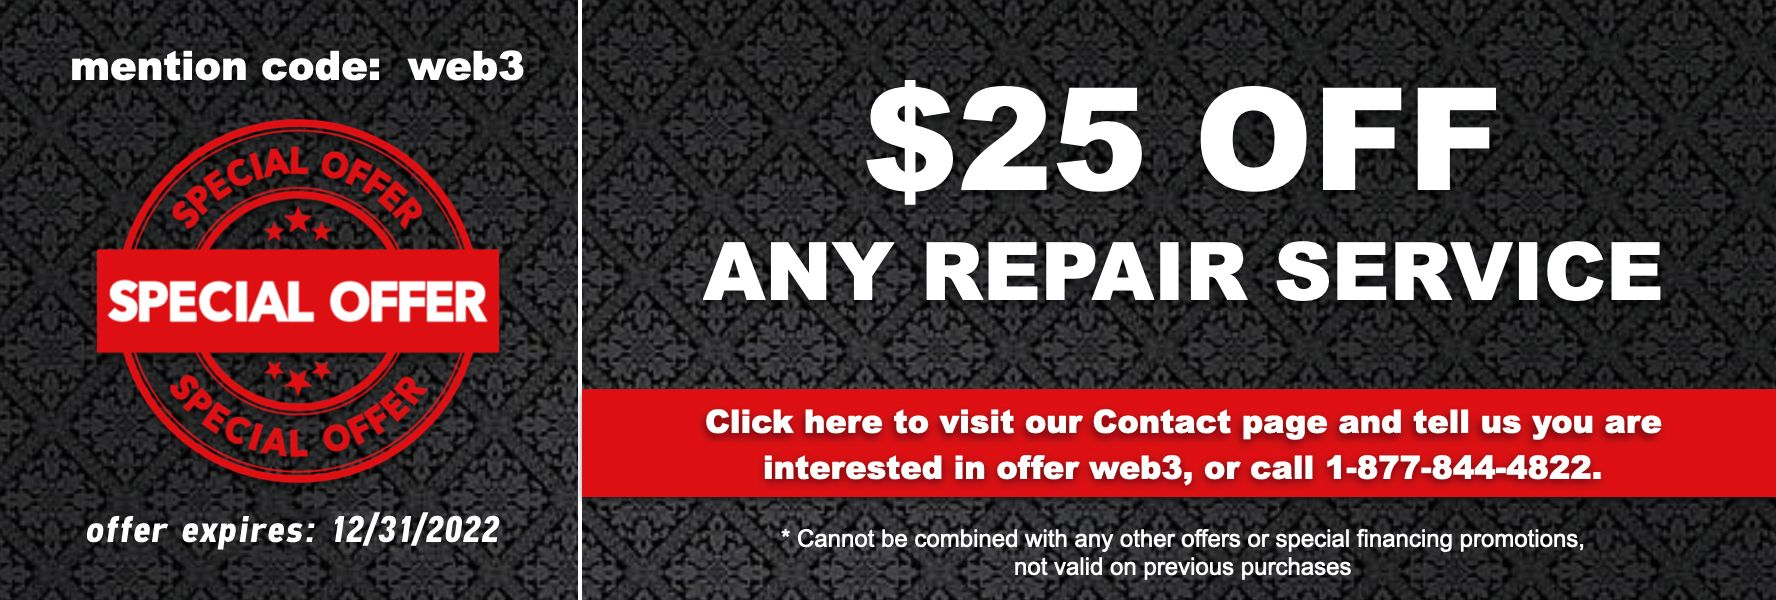 any-repair-service-25-dollars-off